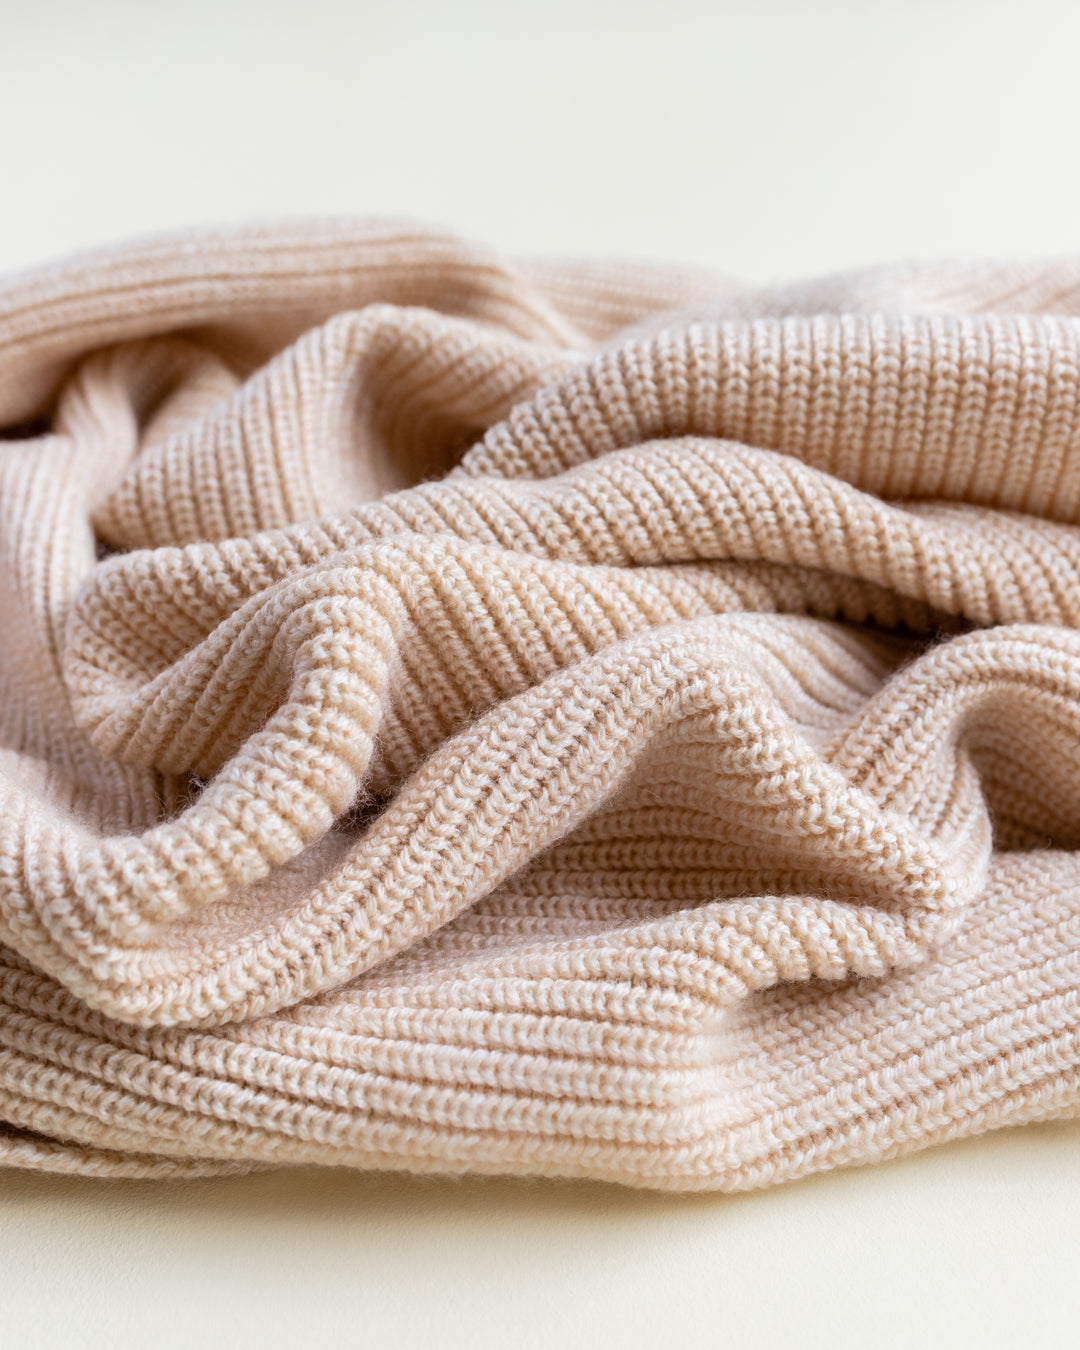 Hvid Knitwear organic merino wool baby kids blanket Anita large textured  apricot off-white sand beige neutral  for newborn 